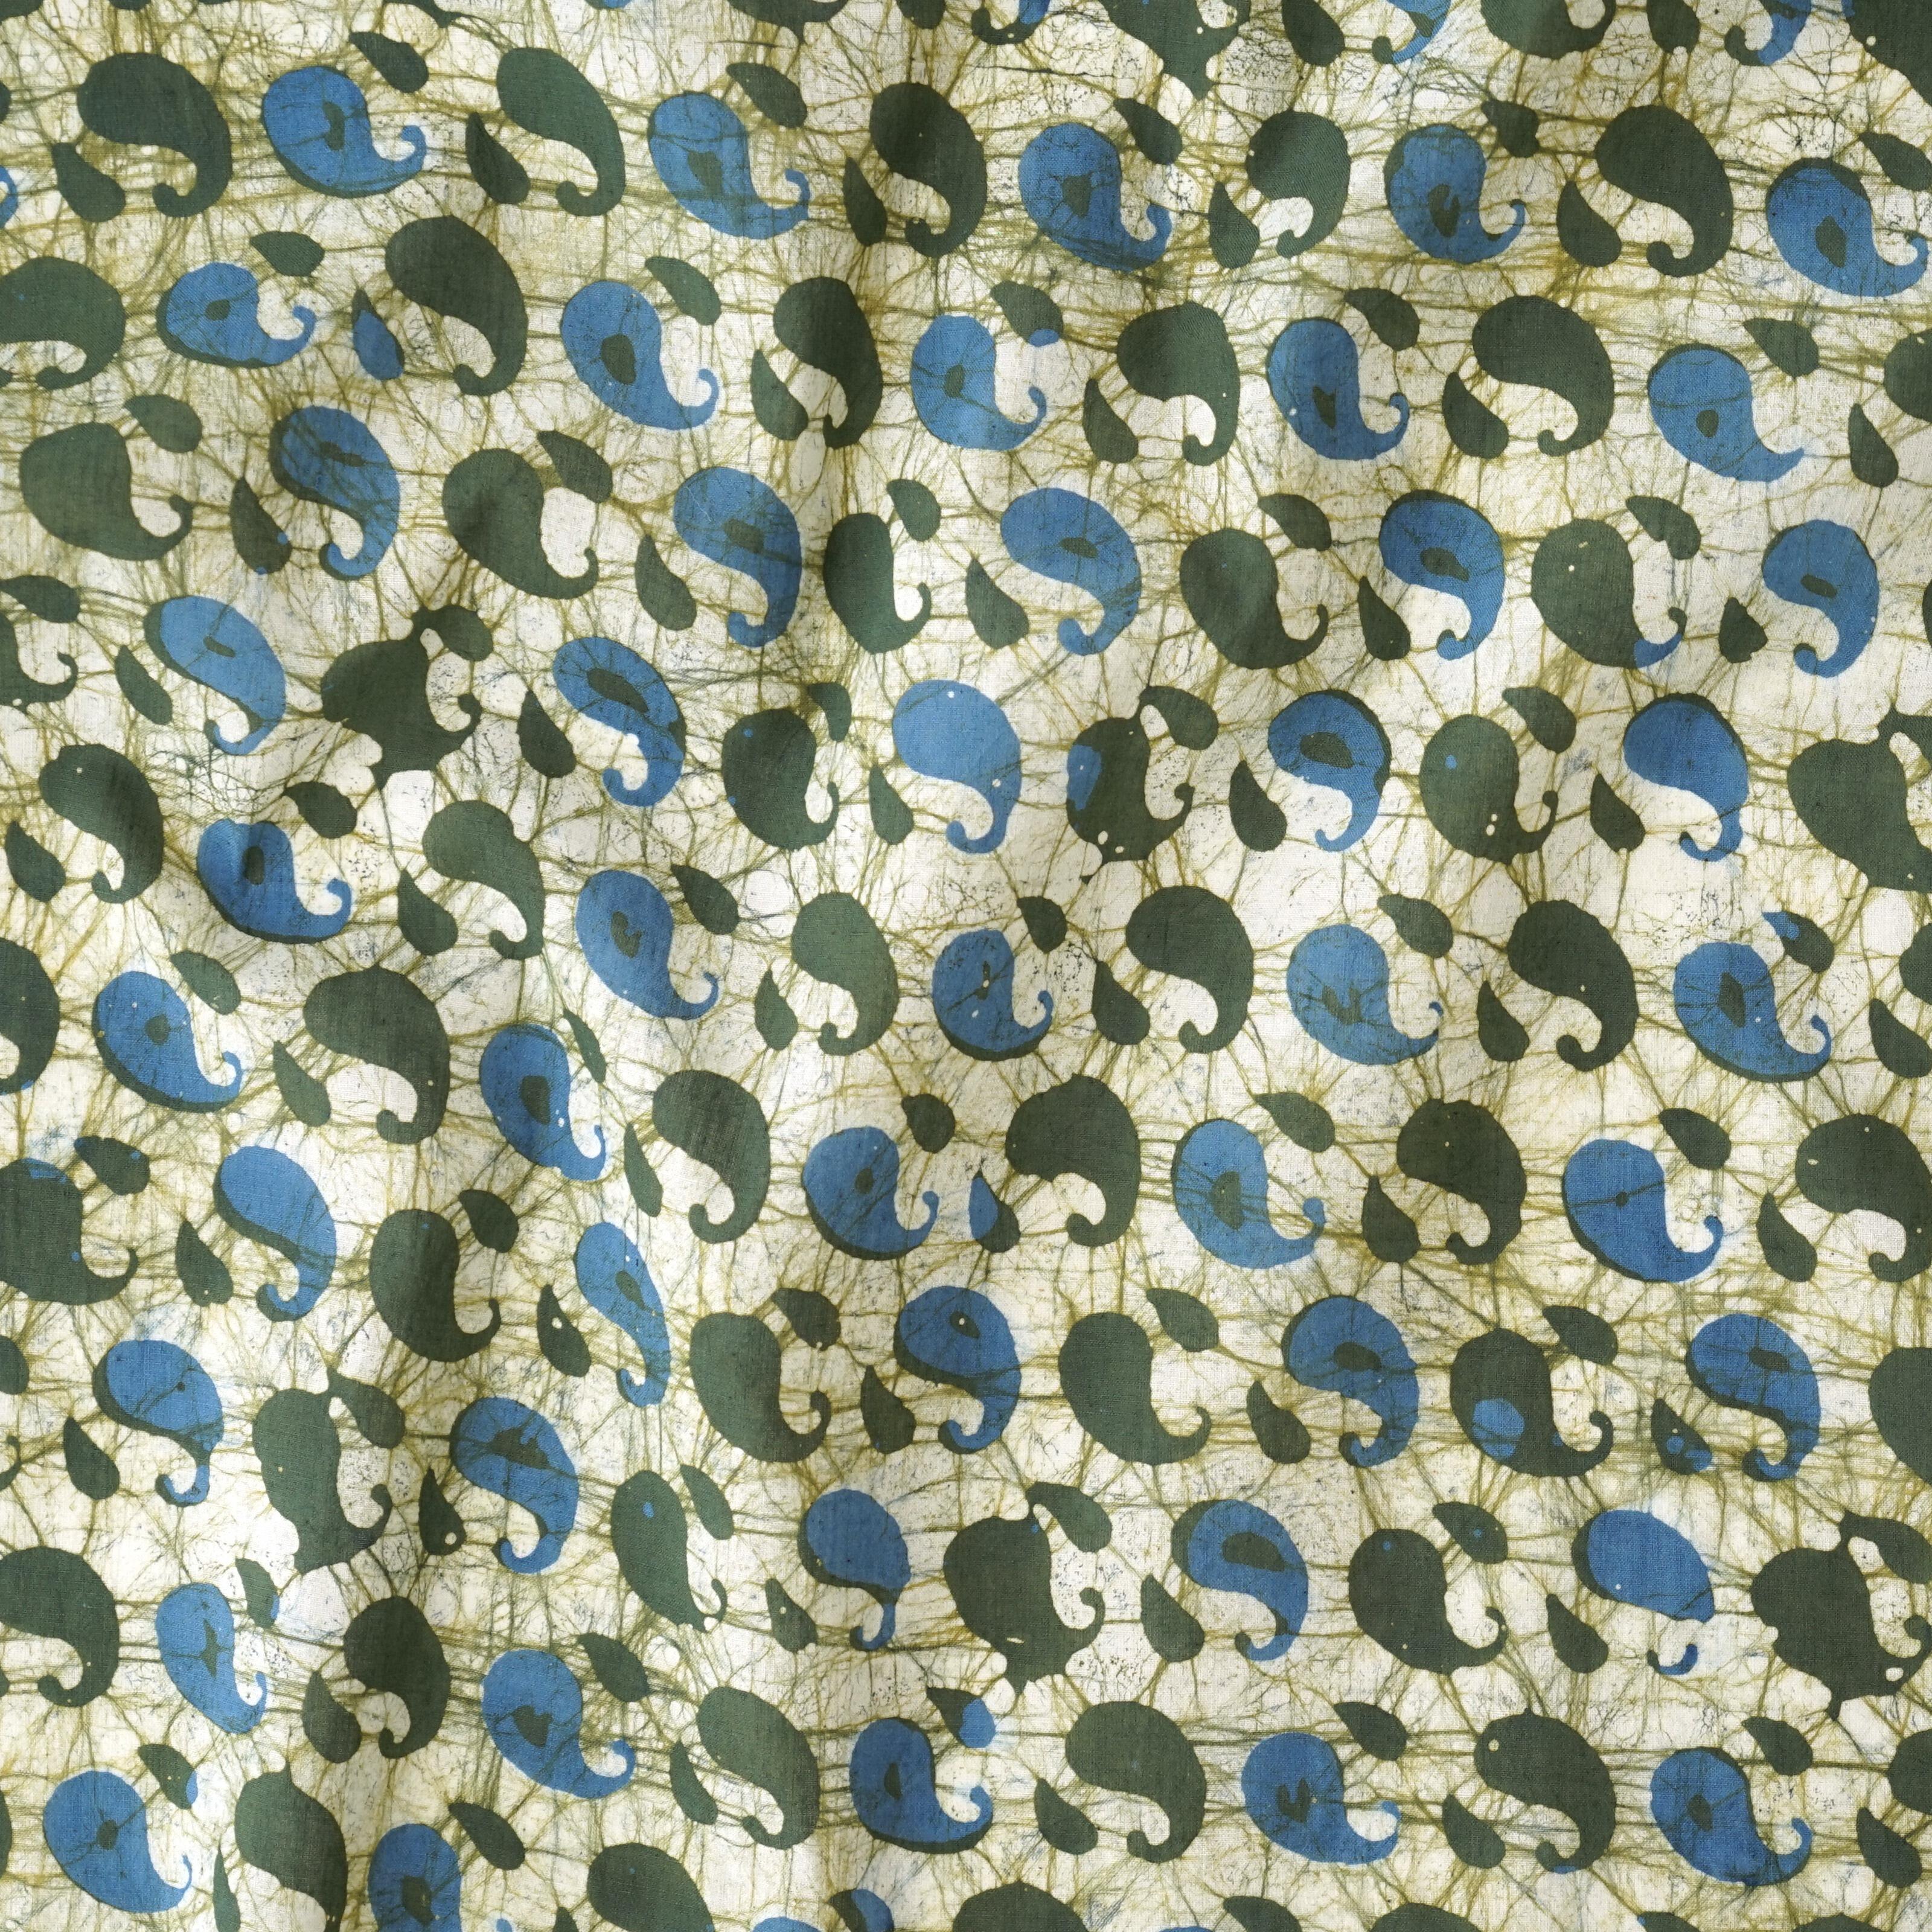 Block-Printed Batik Fabric - Cotton Cloth - Reactive Dyes - Paisley Design - Contrast